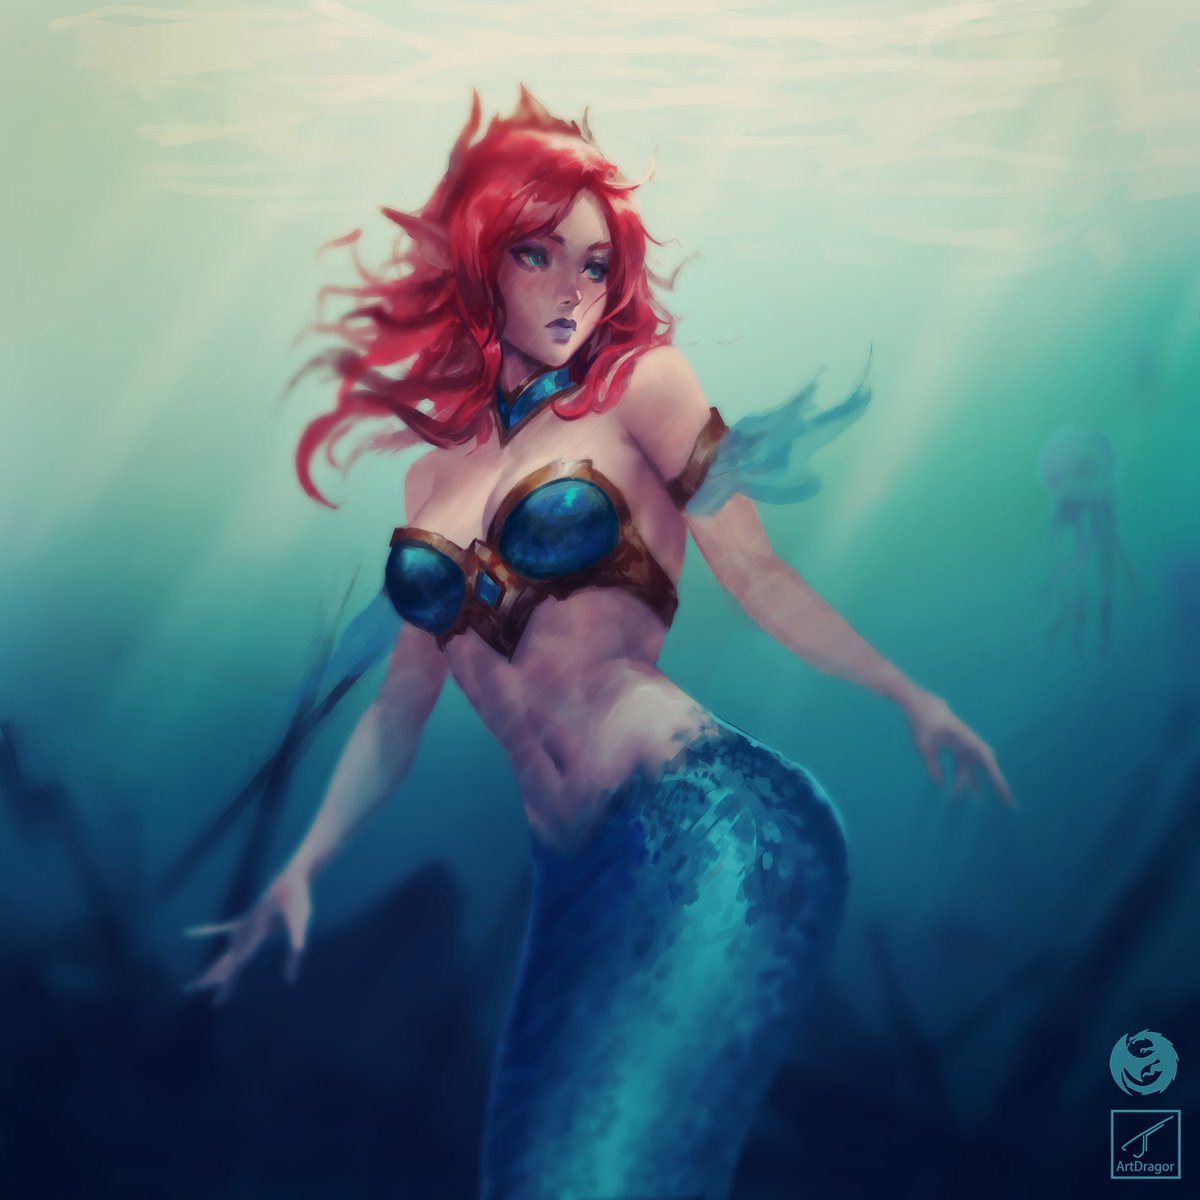 Completely forgot about merMay so I rushed on last second... here is one mermaid for ya!

#Art #mermay2023  #MermaidIllustration #MermaidDrawing #FantasyArt #DigitalArt #ArtOfTheDay #ArtCommunity #UnderwaterArt #MagicalCreatures